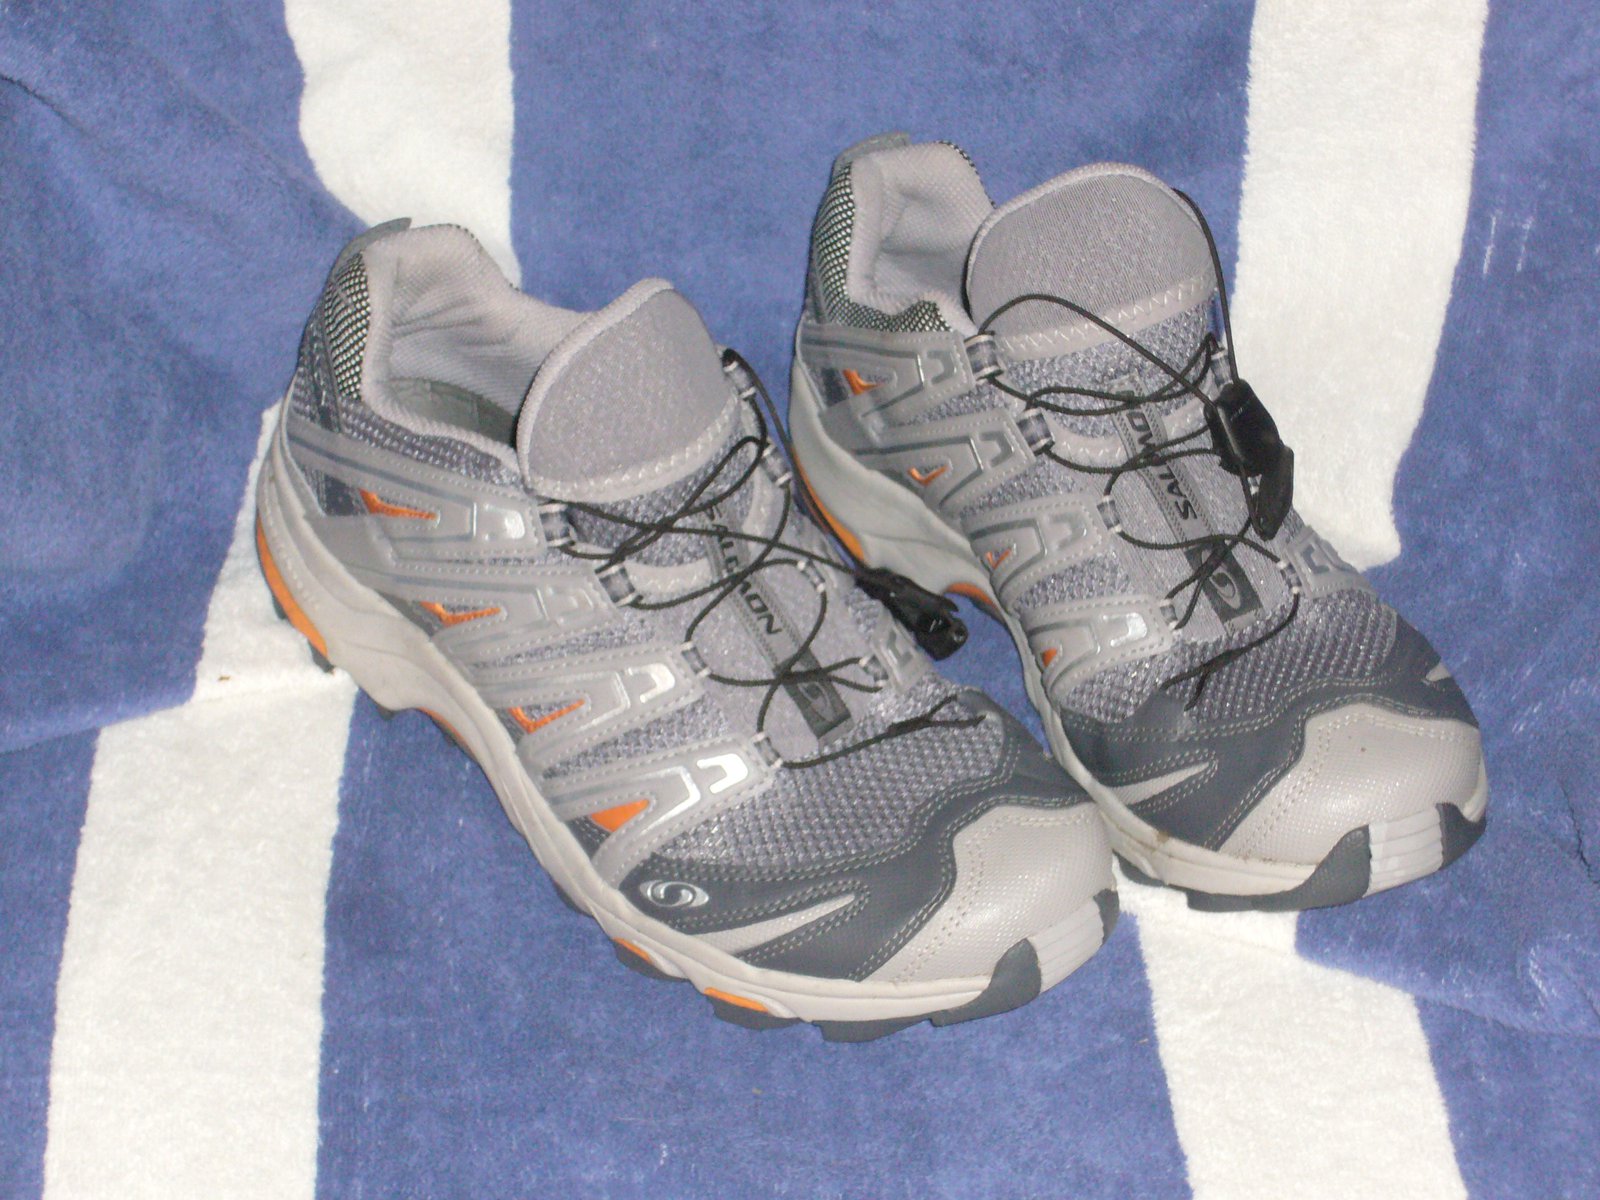 Salomon Trail running shoes